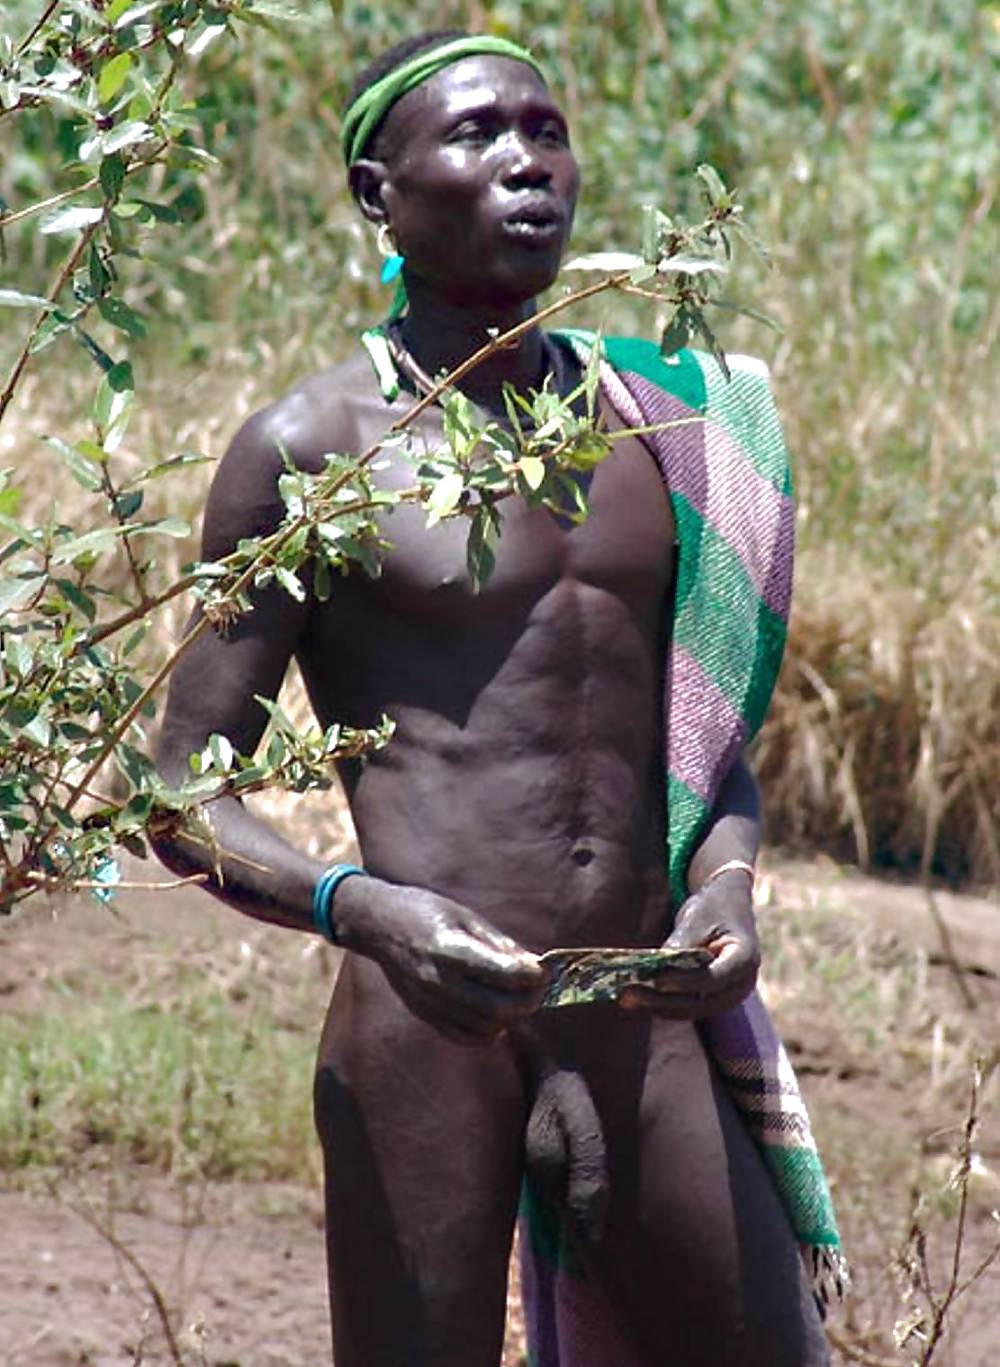 Gay african tribal porn